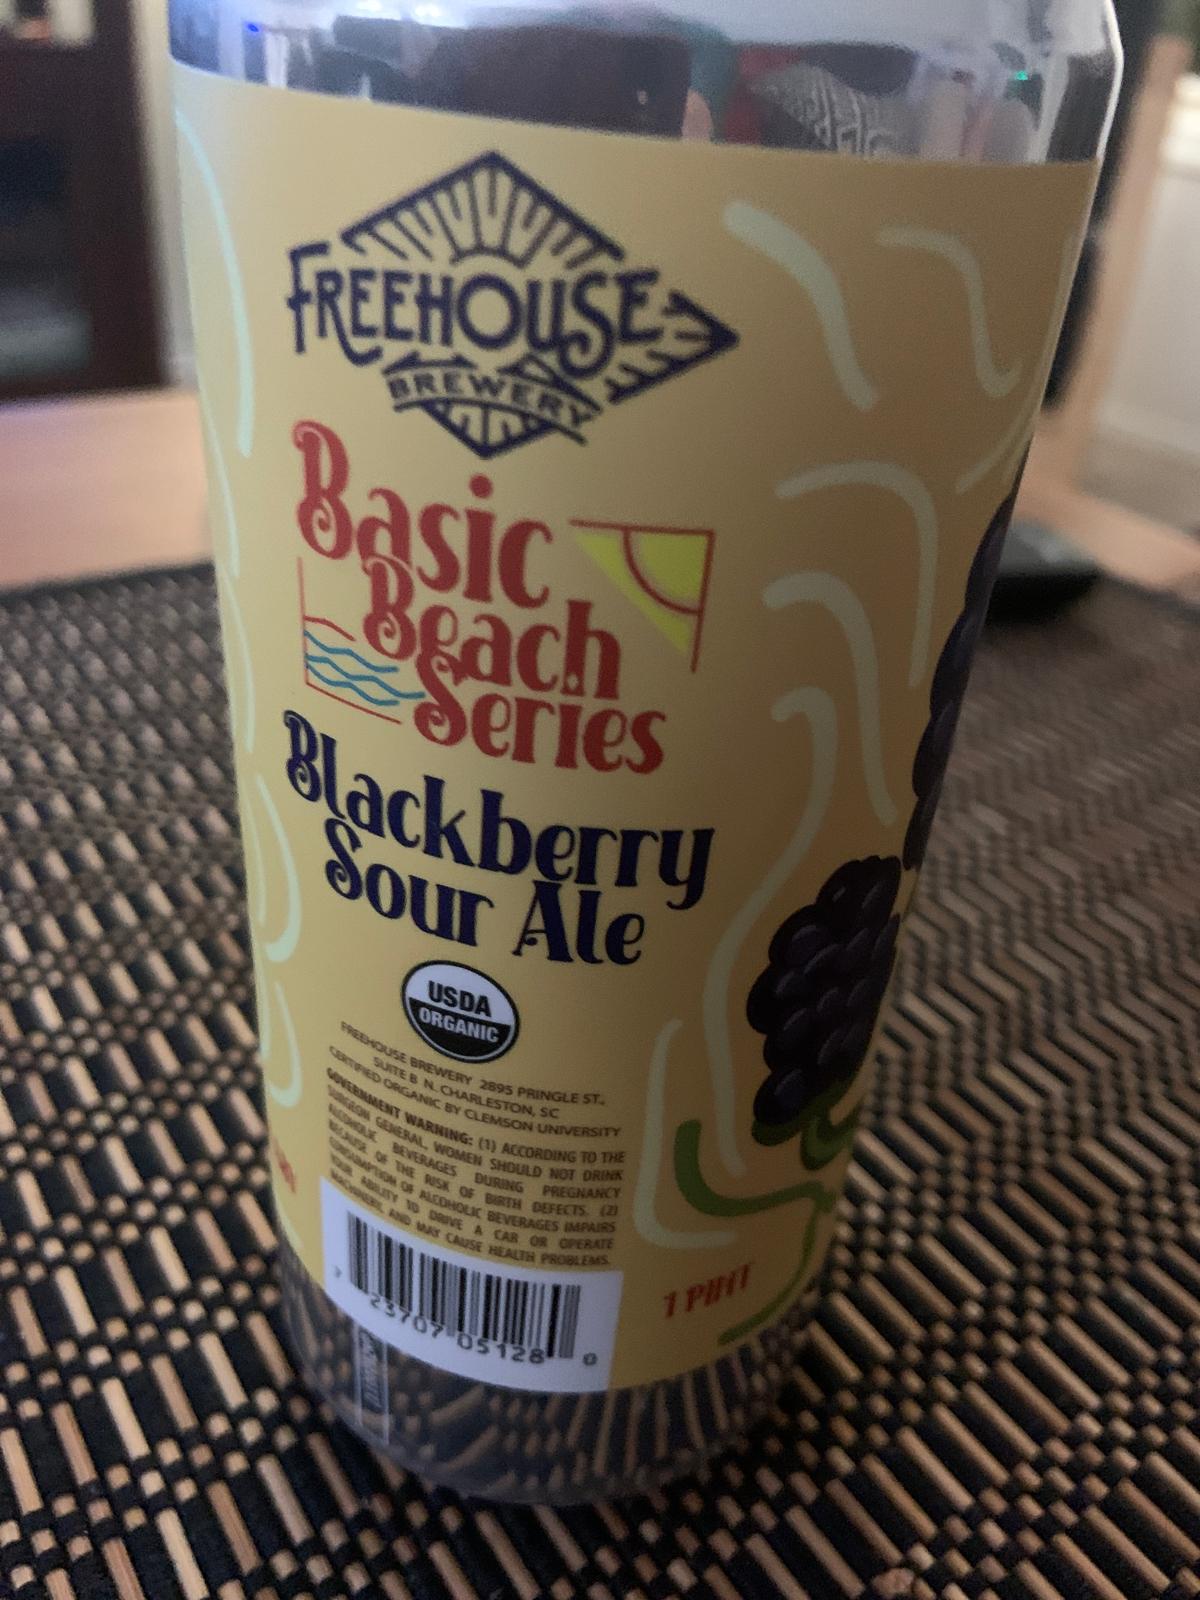 Basic Beach: Blackberry Sour Ale